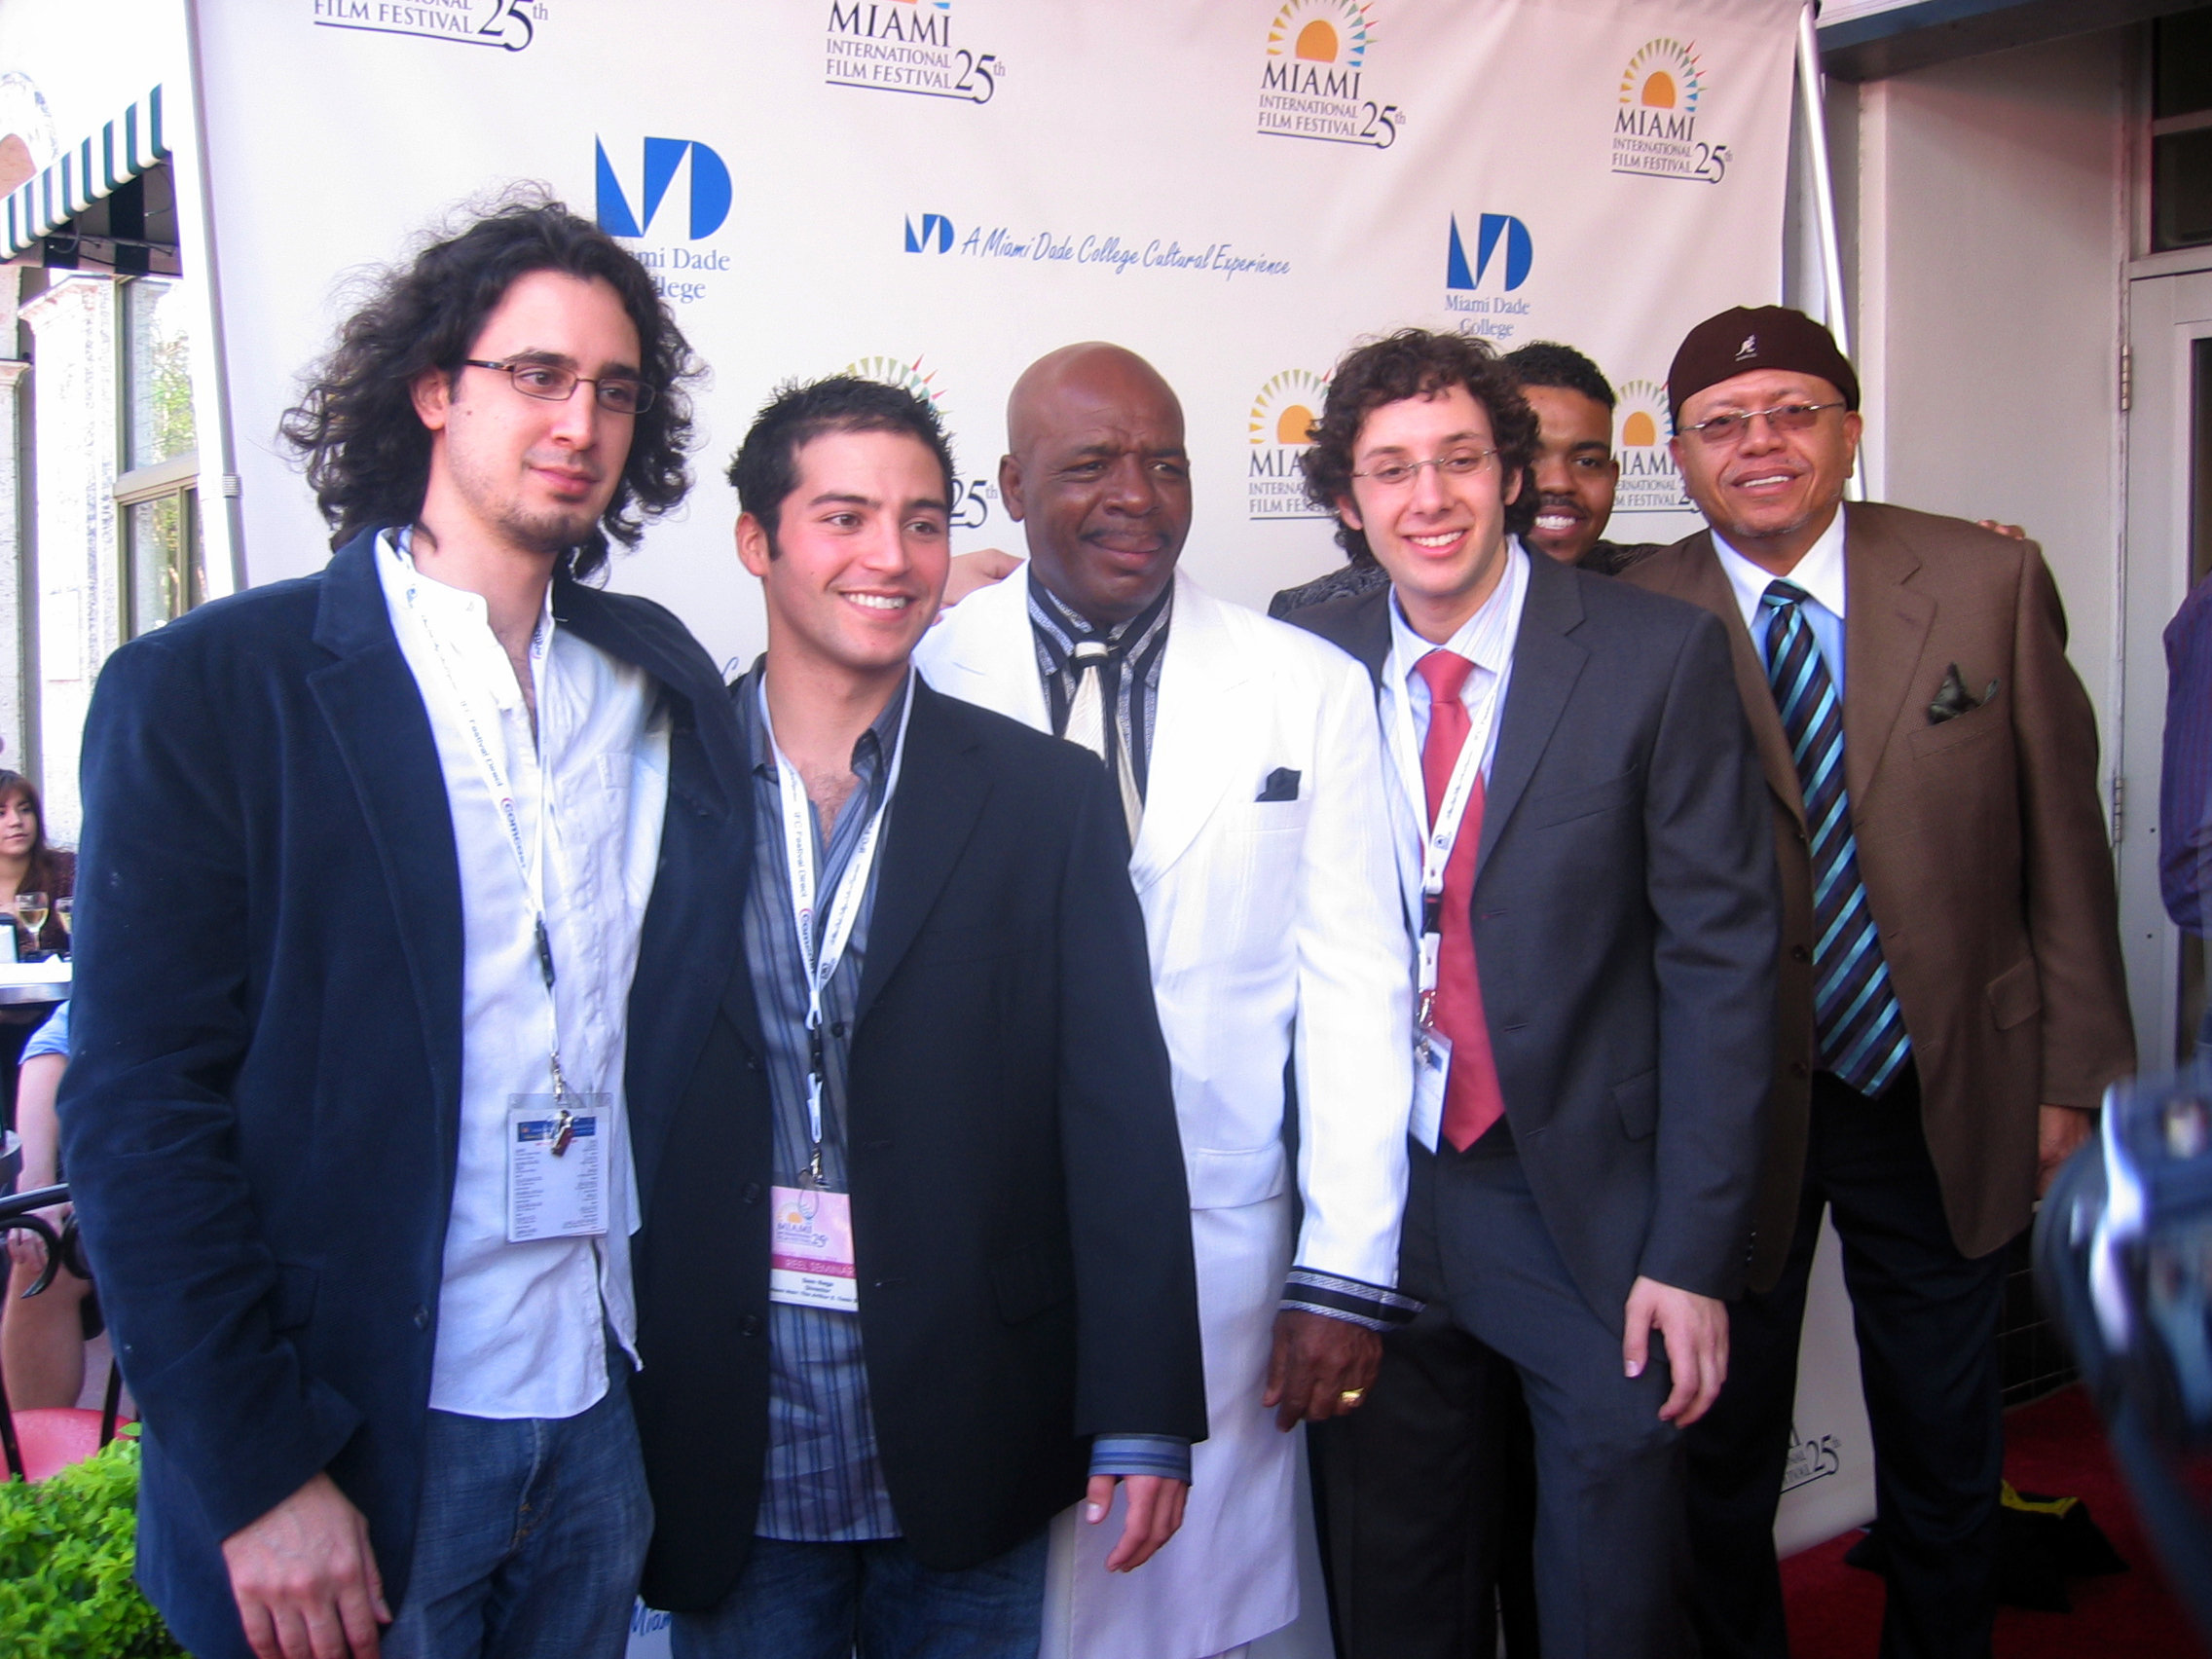 From left: Jorge Valdes-Iga, Sam Rega, Leo Casino, Joshua Miller, Eric Bendross, and Alvin Harris at 2008 Miami International Film Festival premiere of 